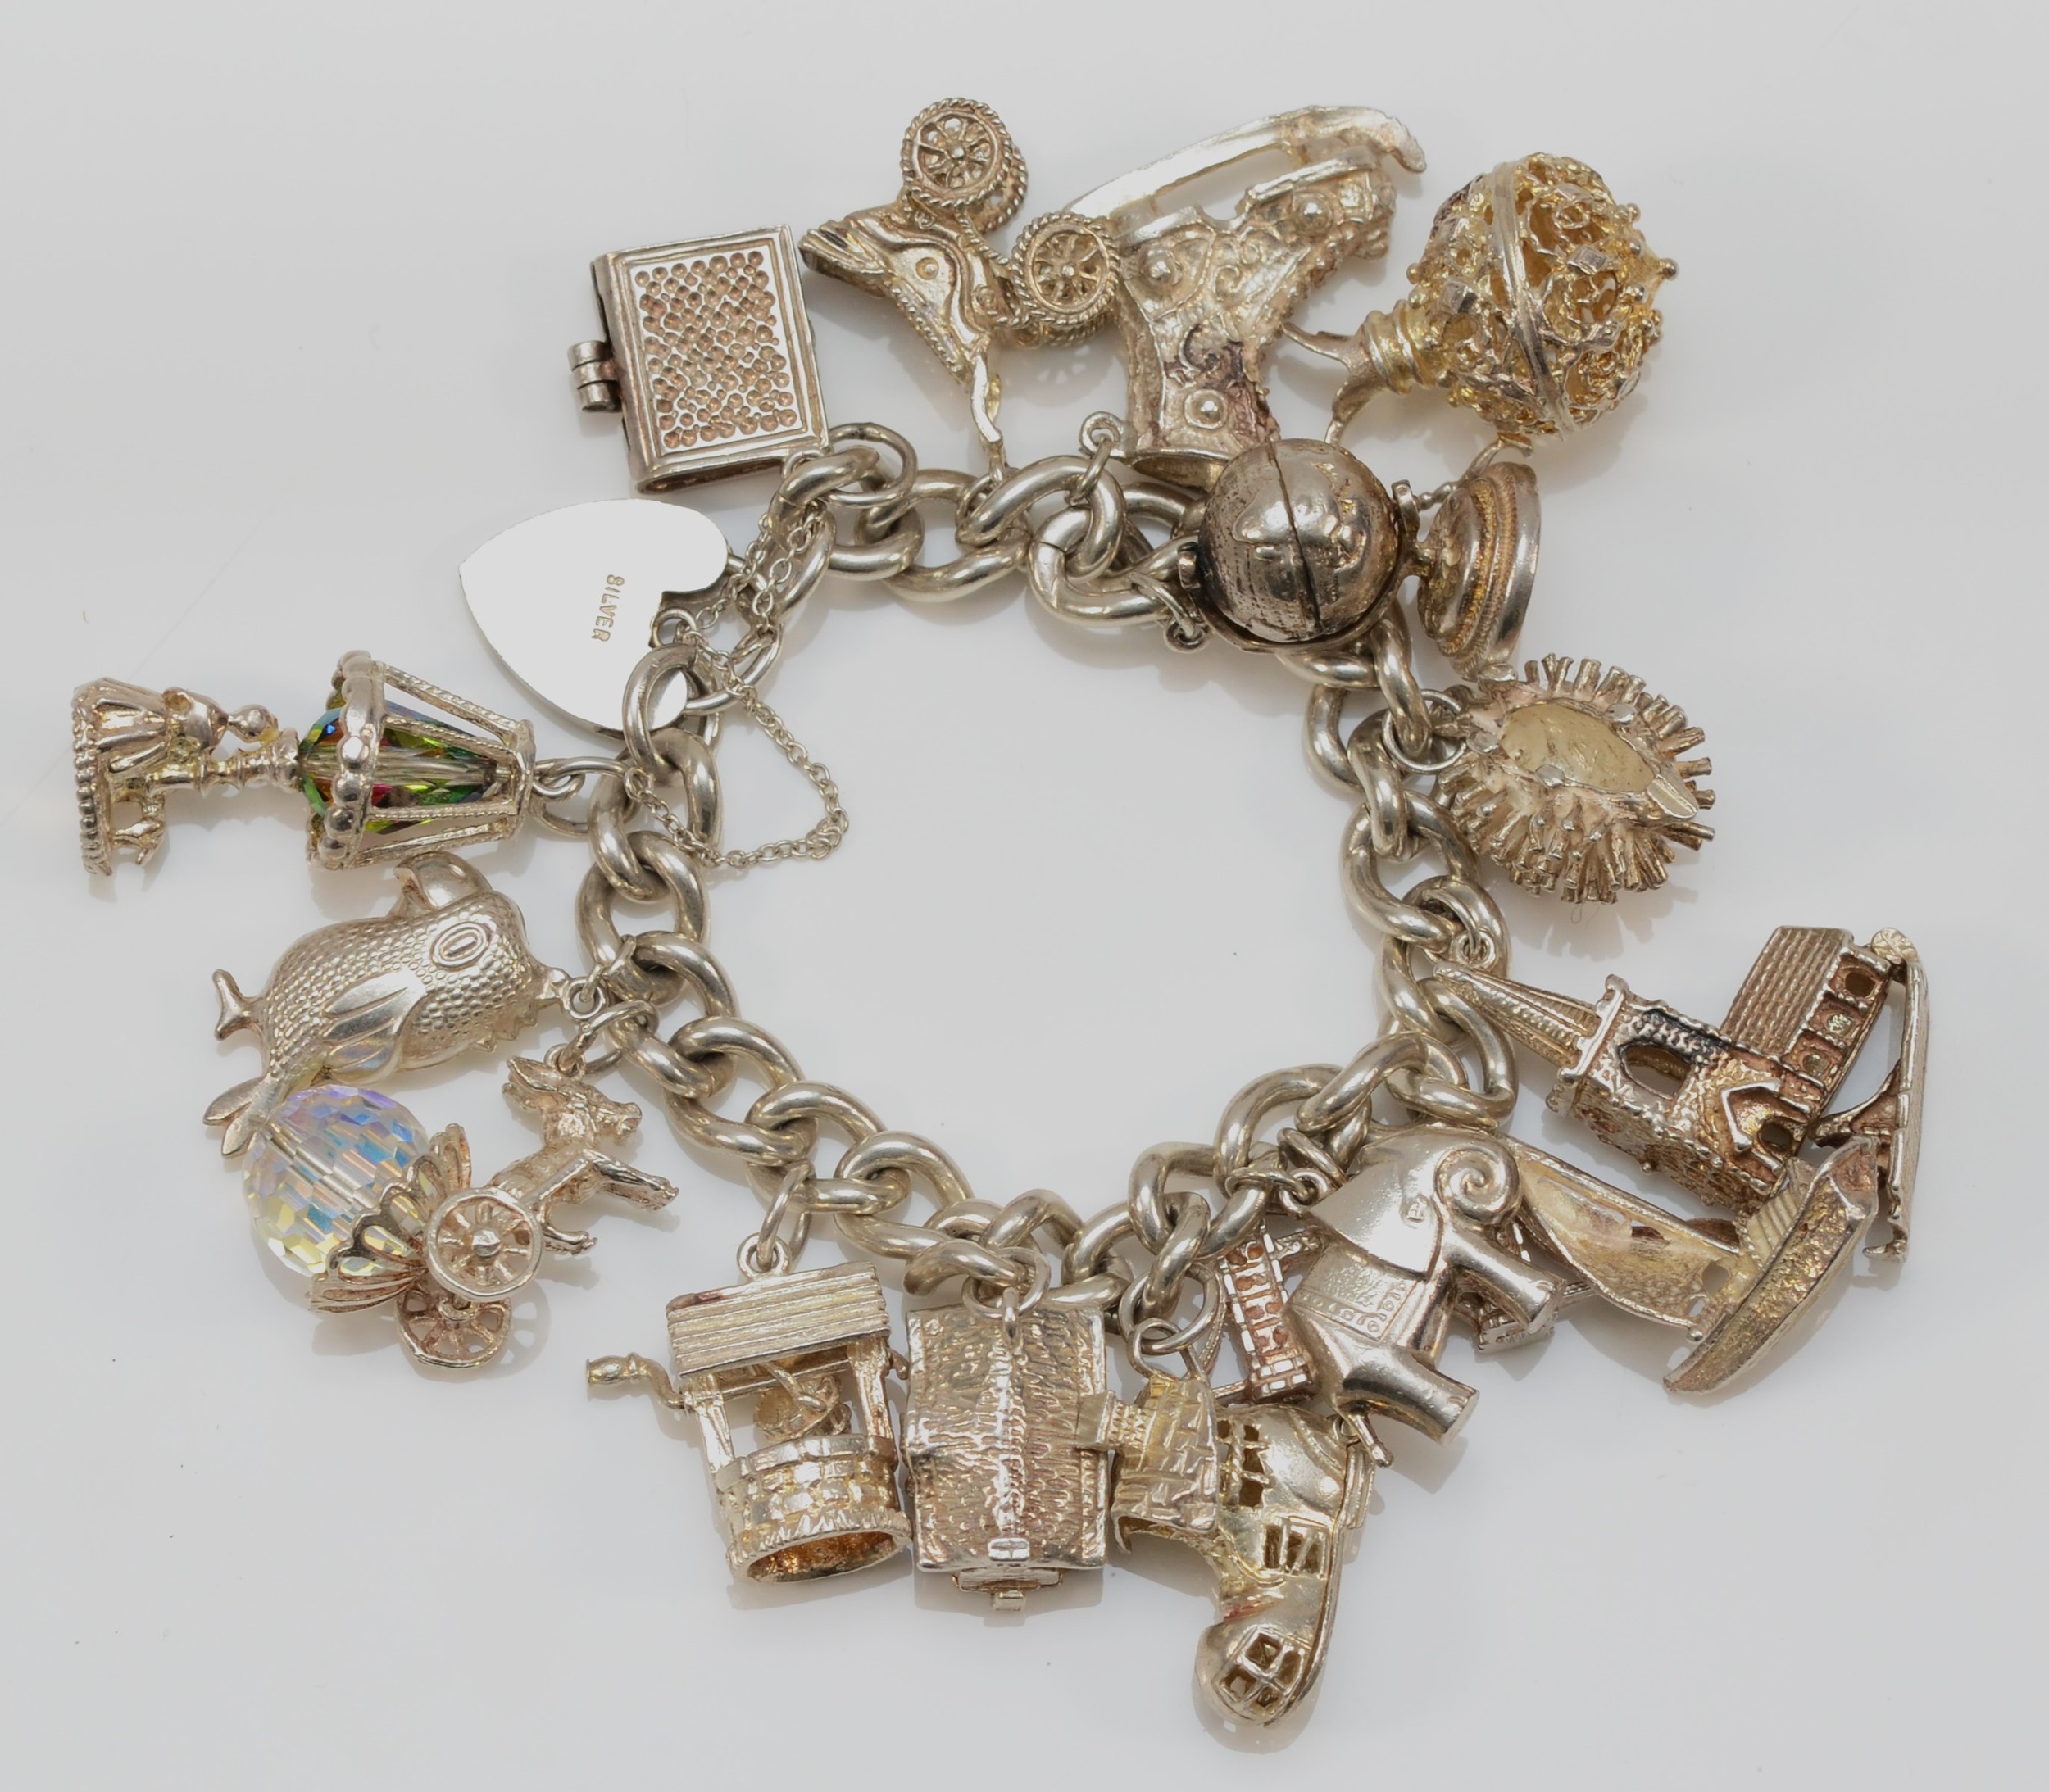 A heavy silver charm bracelet, 107gm - Image 3 of 3